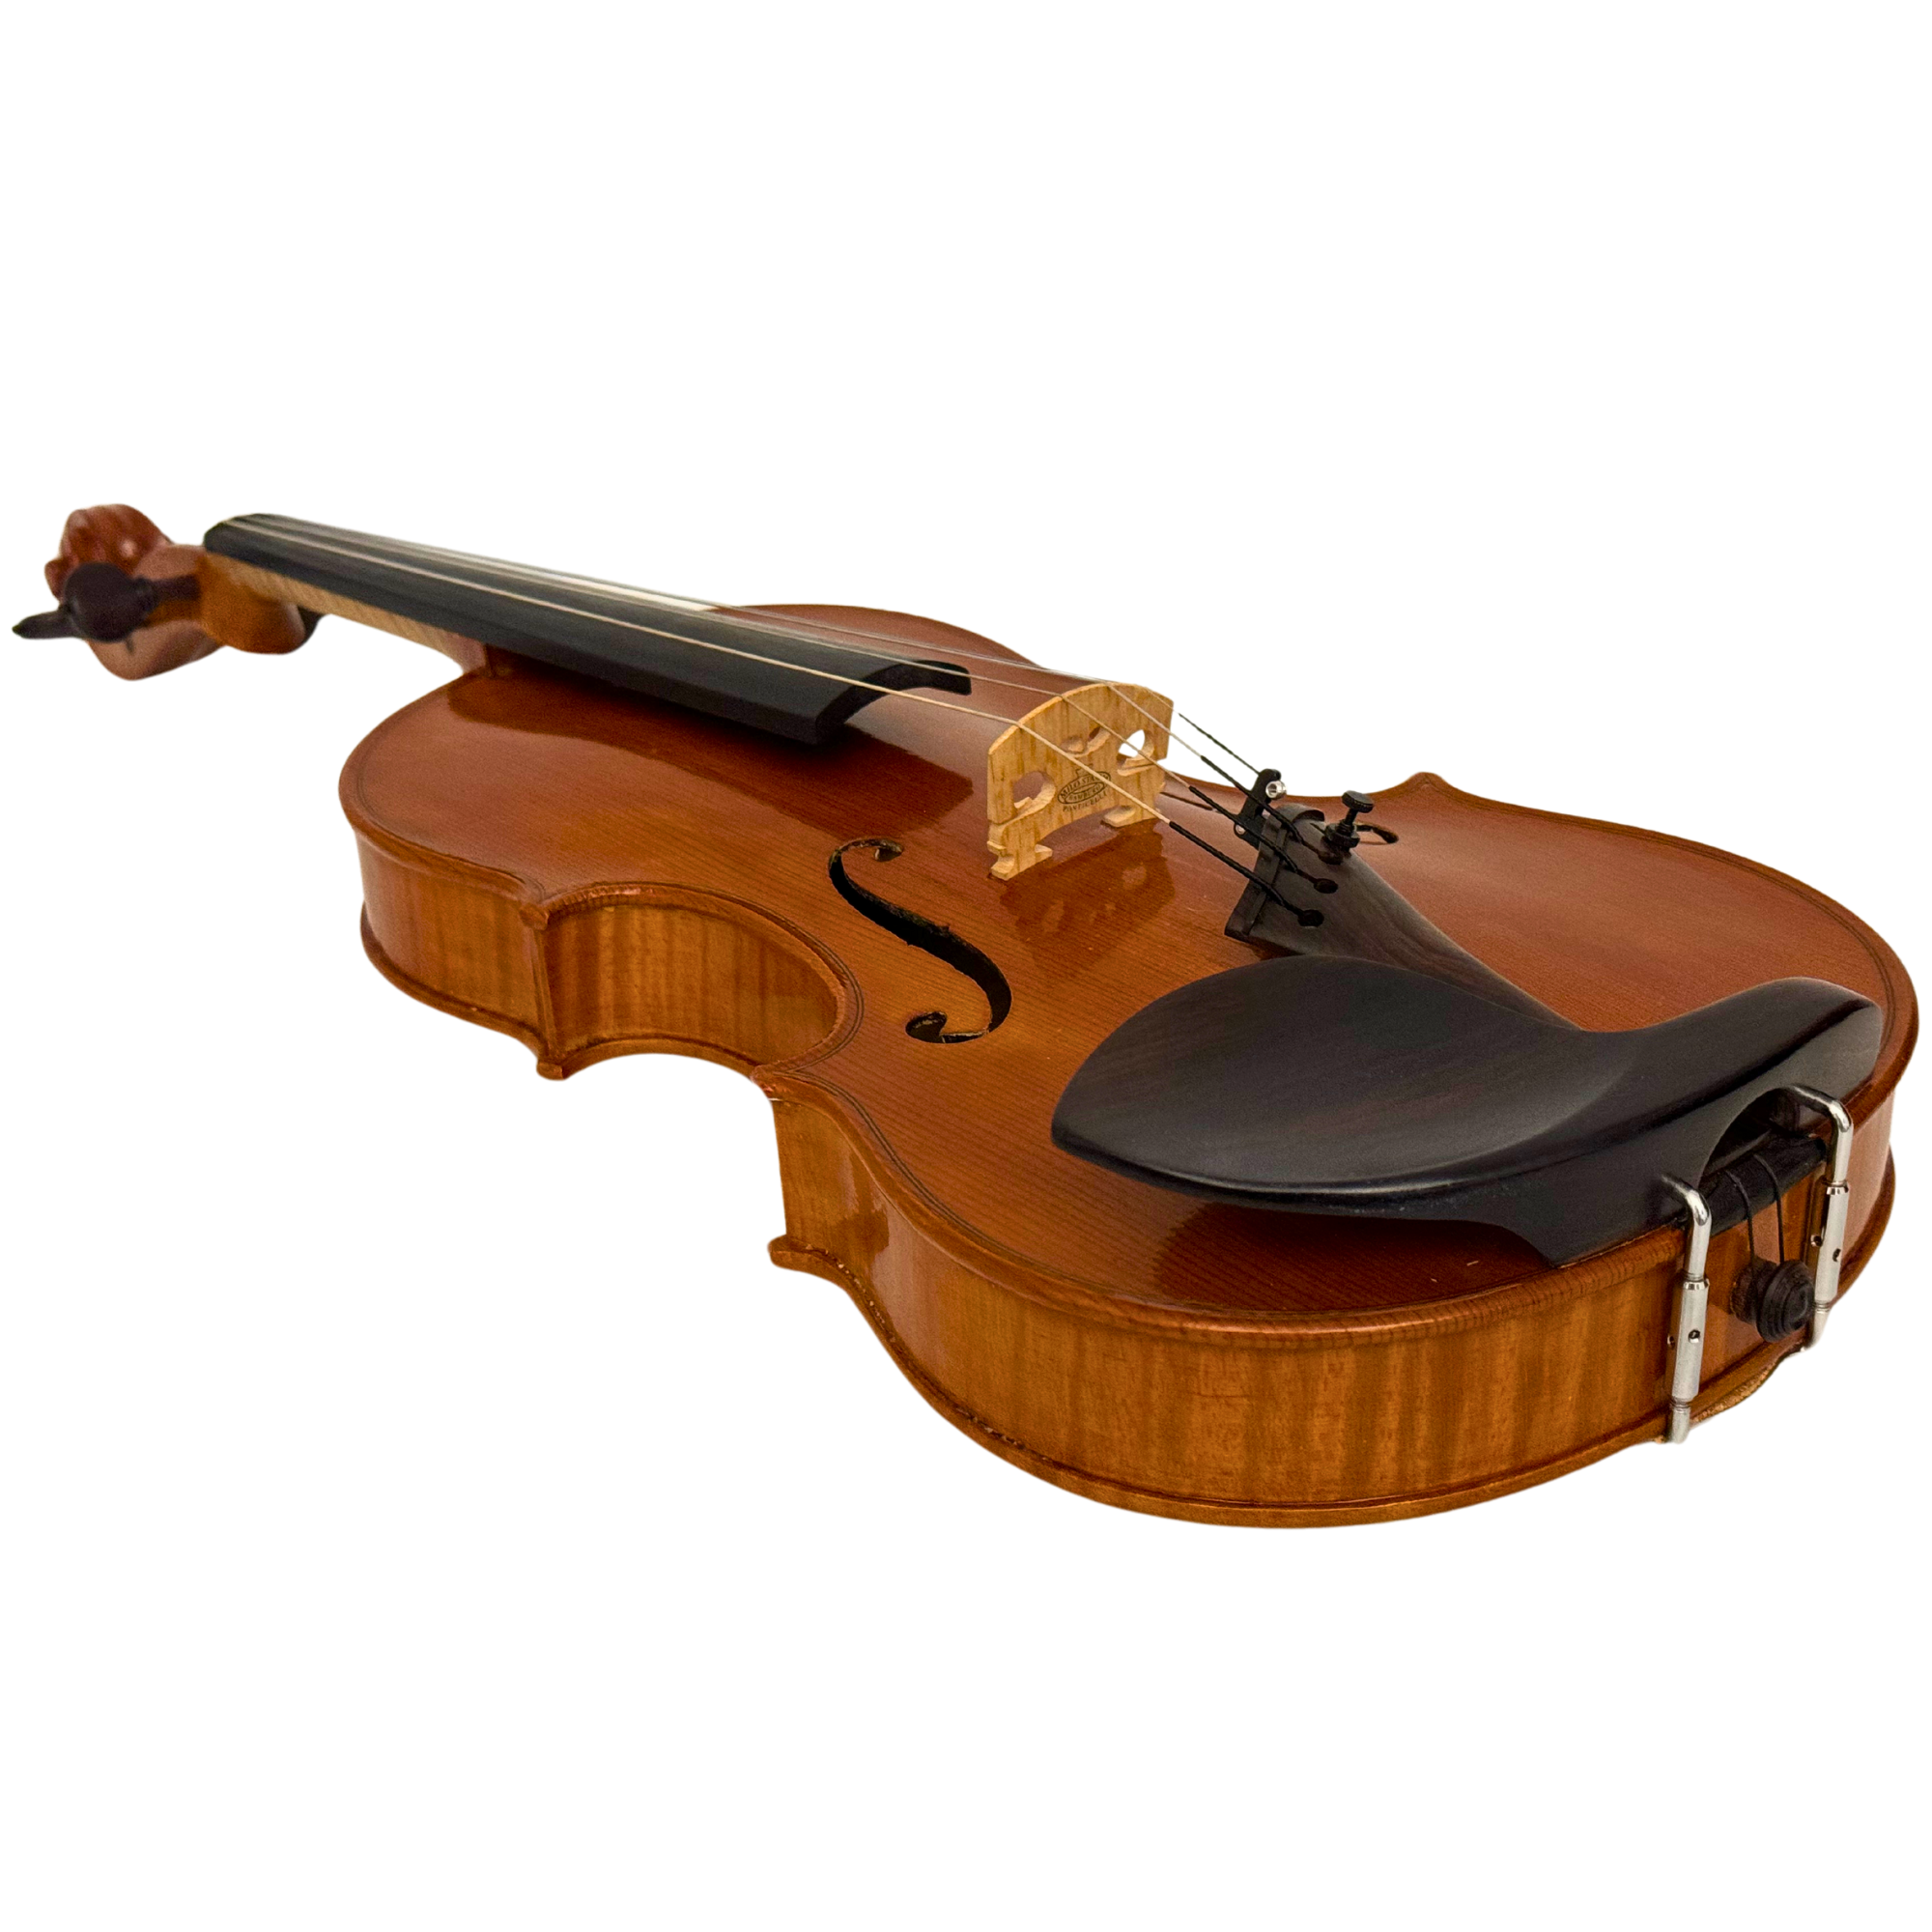 ZS Strings Guarneri model Violin No. 006 in action